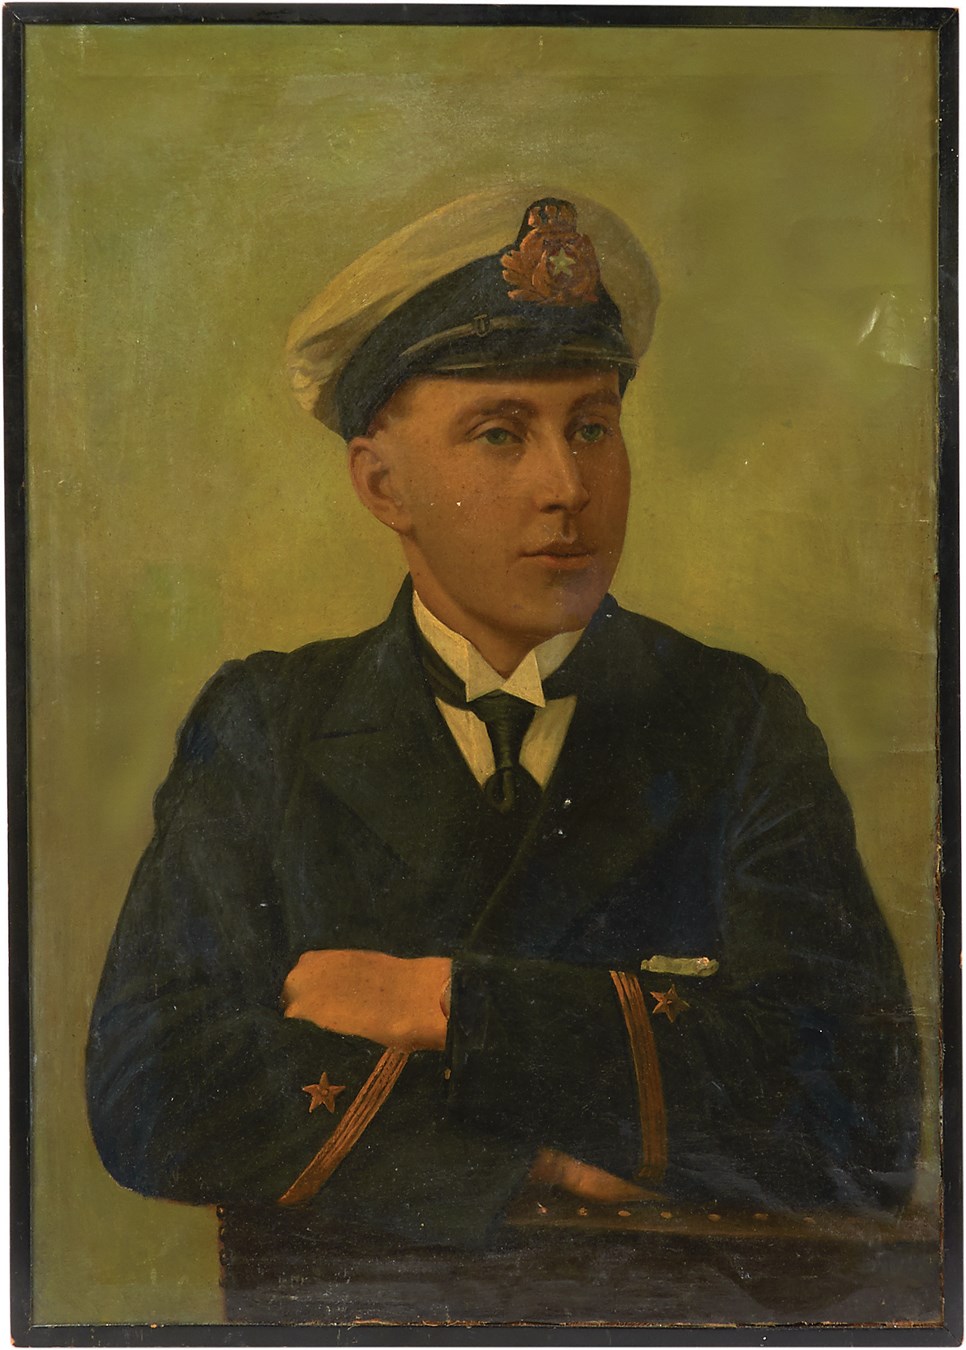 - 1912 "Pre-Sinking" Titanic Oil on Canvas Sitting Portrait of Fearless Wireless Operator Jack Phillips